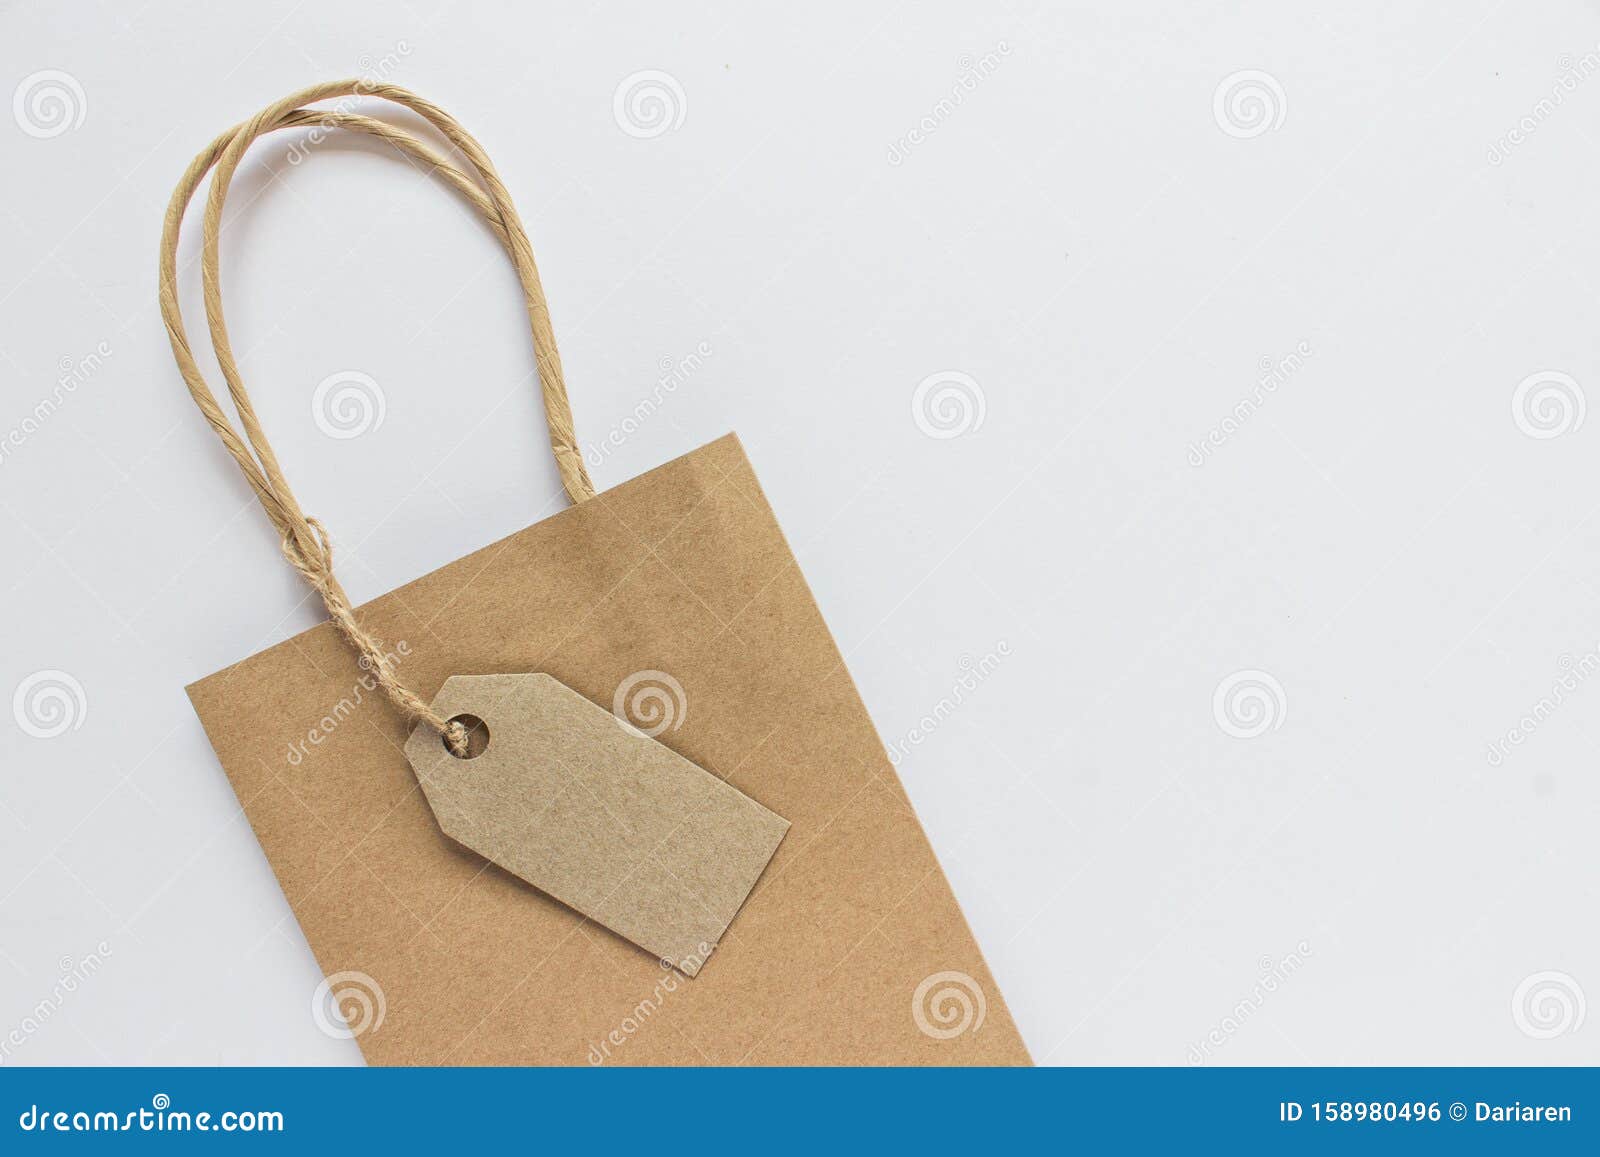 Download Blank Mockup Kraft Paper Present Shopping Bag On White ...